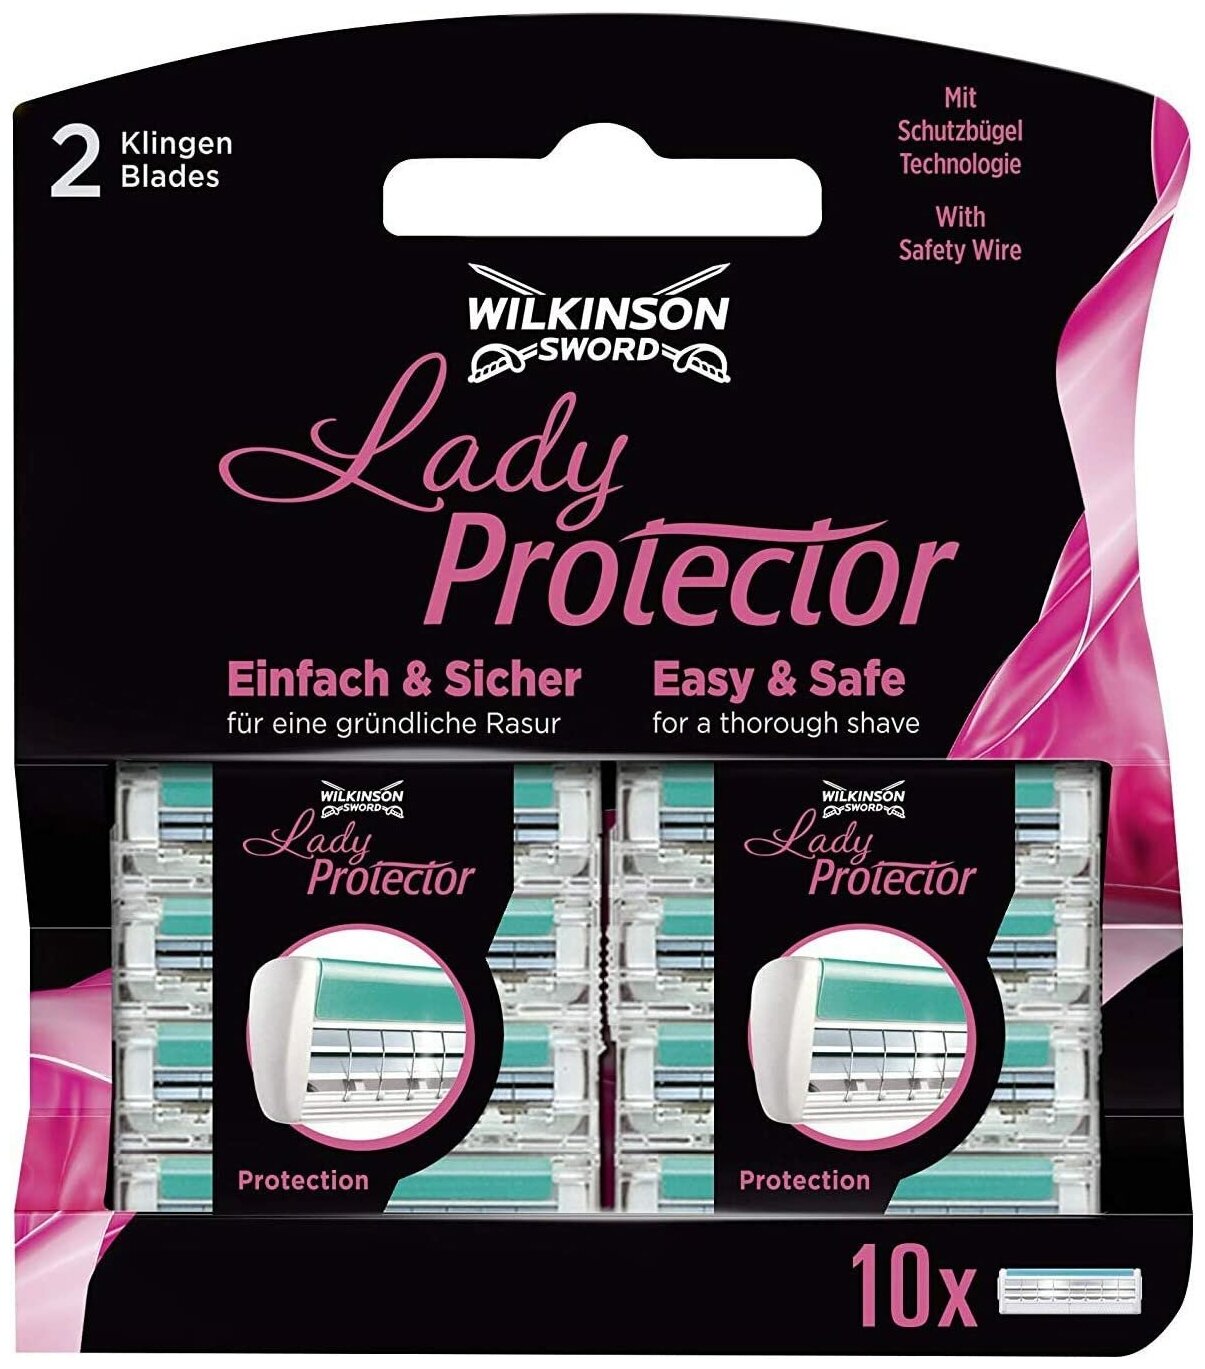 Wilkinson Sword /Schick / Lady Protector / Сменные лезвия для женского станка Lady Protector ( 10 шт.)